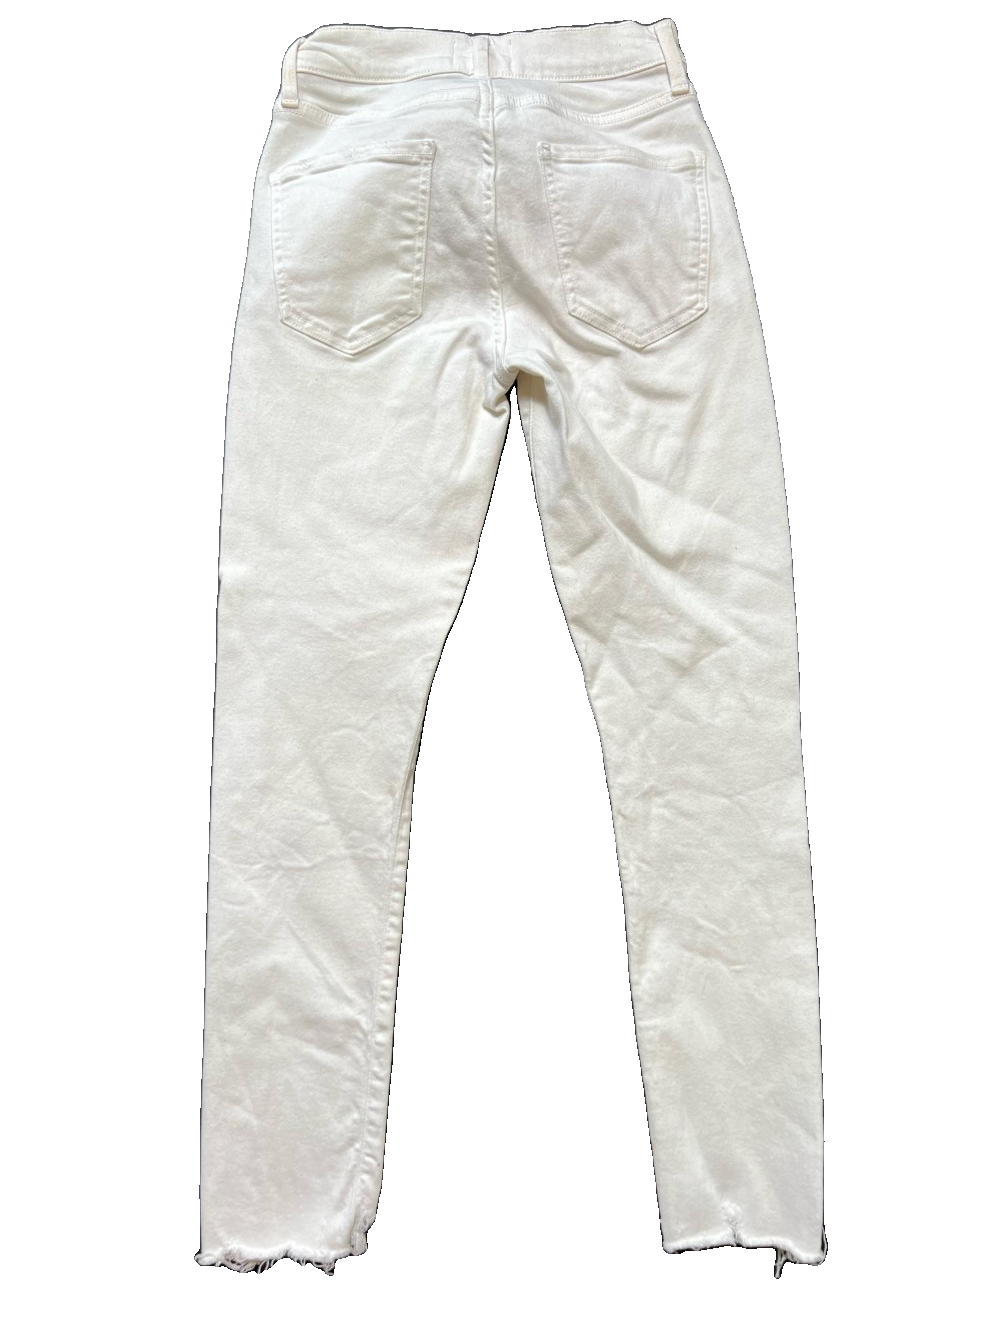 Agolde - White Skinny Jeans